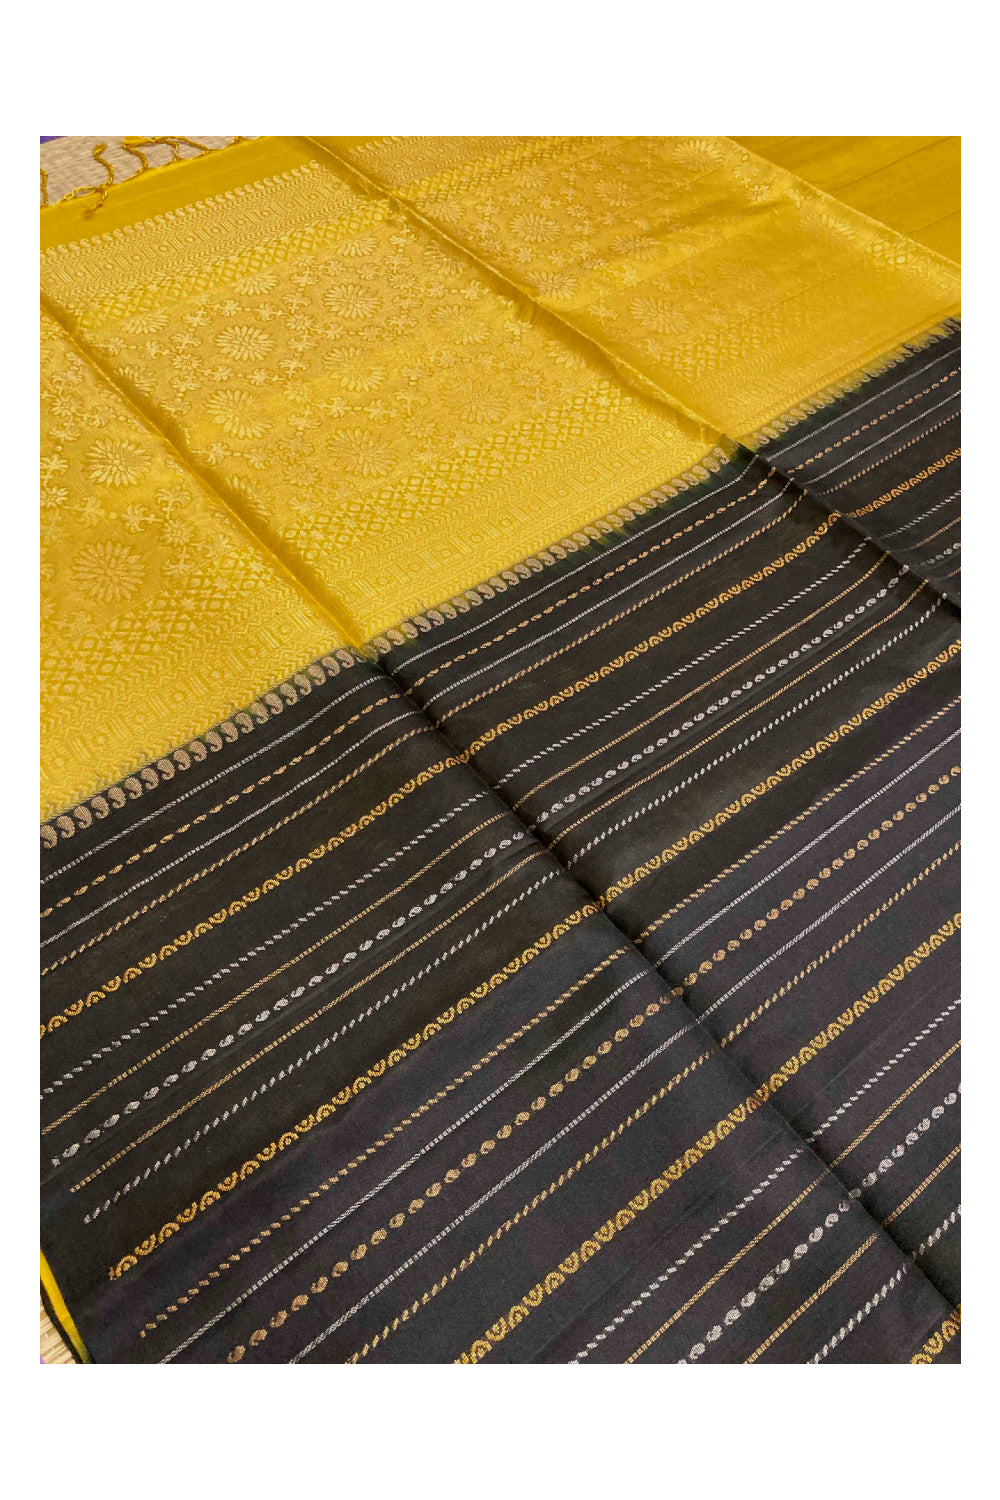 Southloom Handloom Pure Silk Kanchipuram Saree in Black Stripes and Yellow Pallu